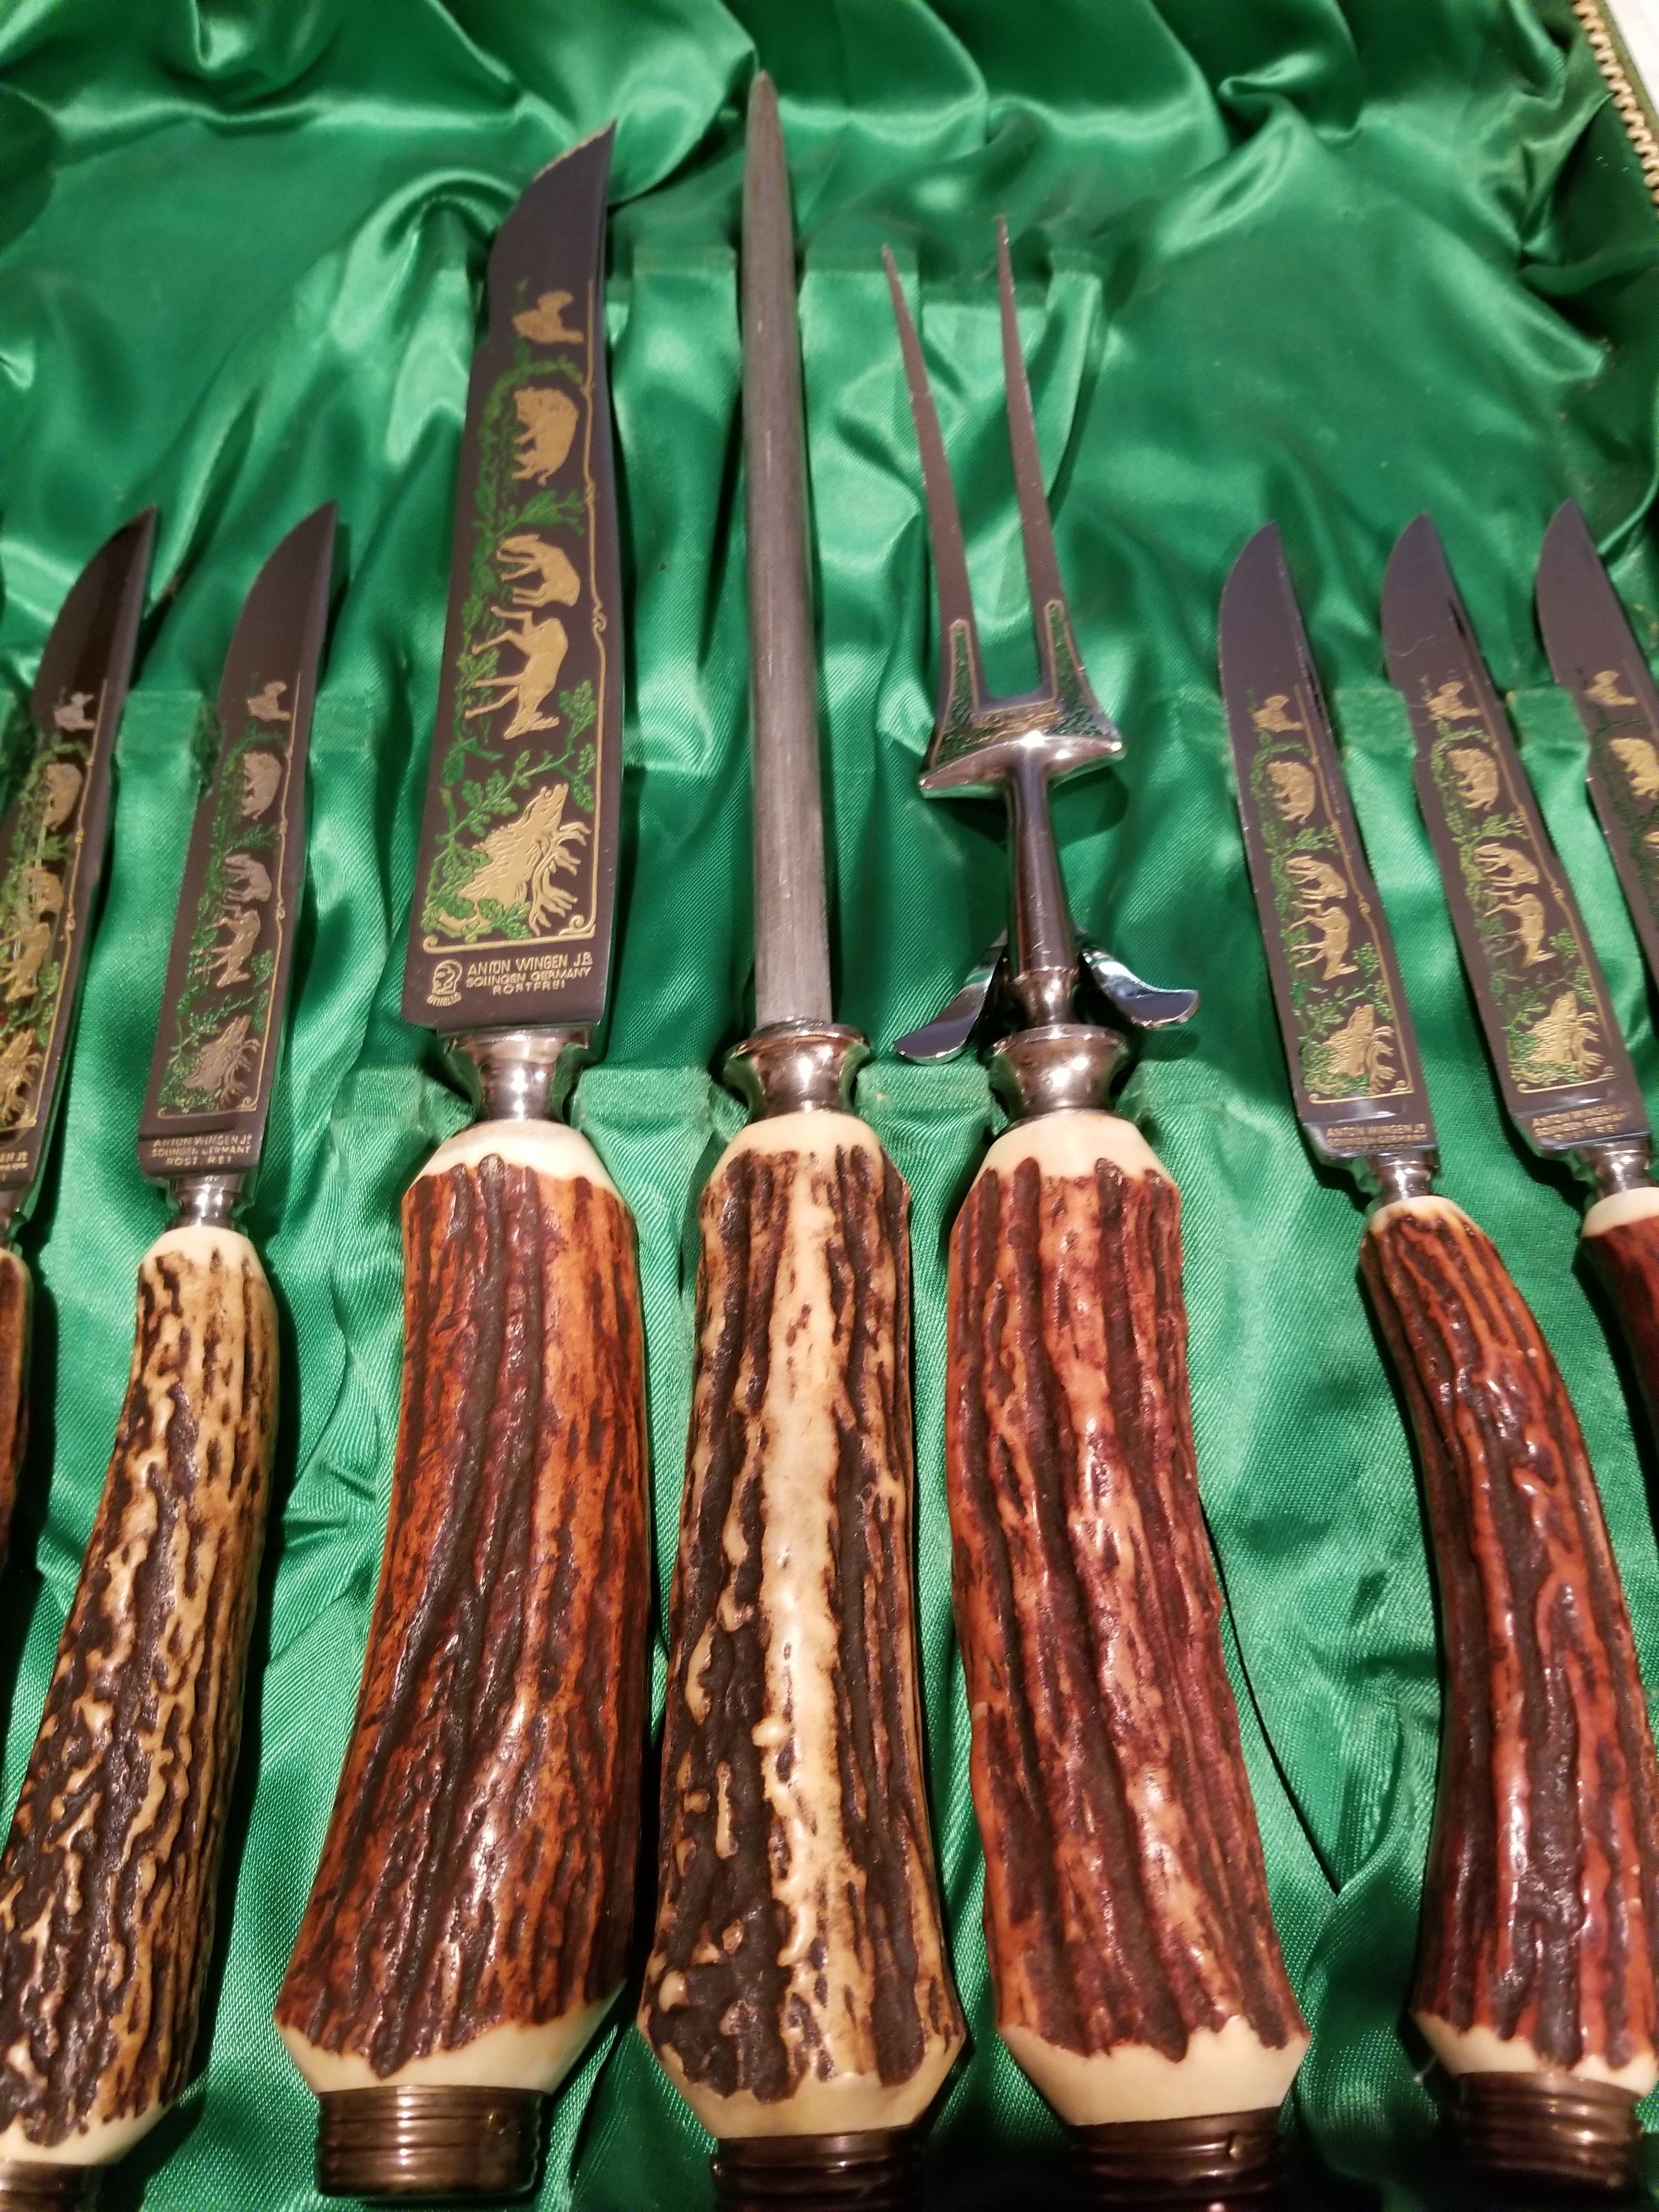 Mixed kitchen knives with wood handles — Plate & Patina